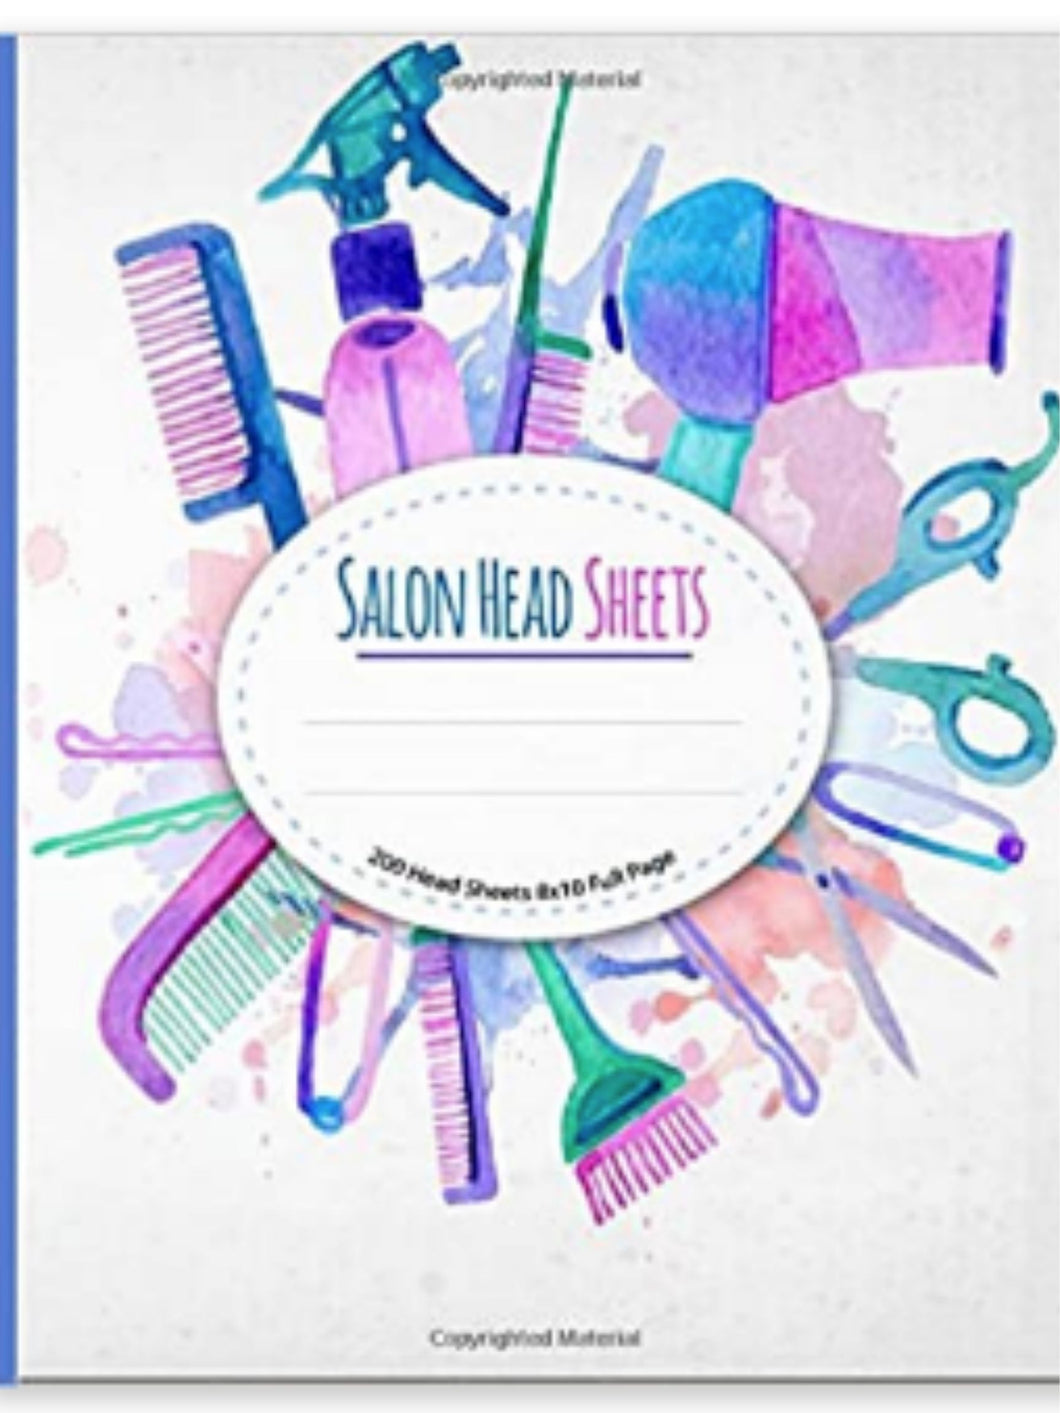 Salon head sheets